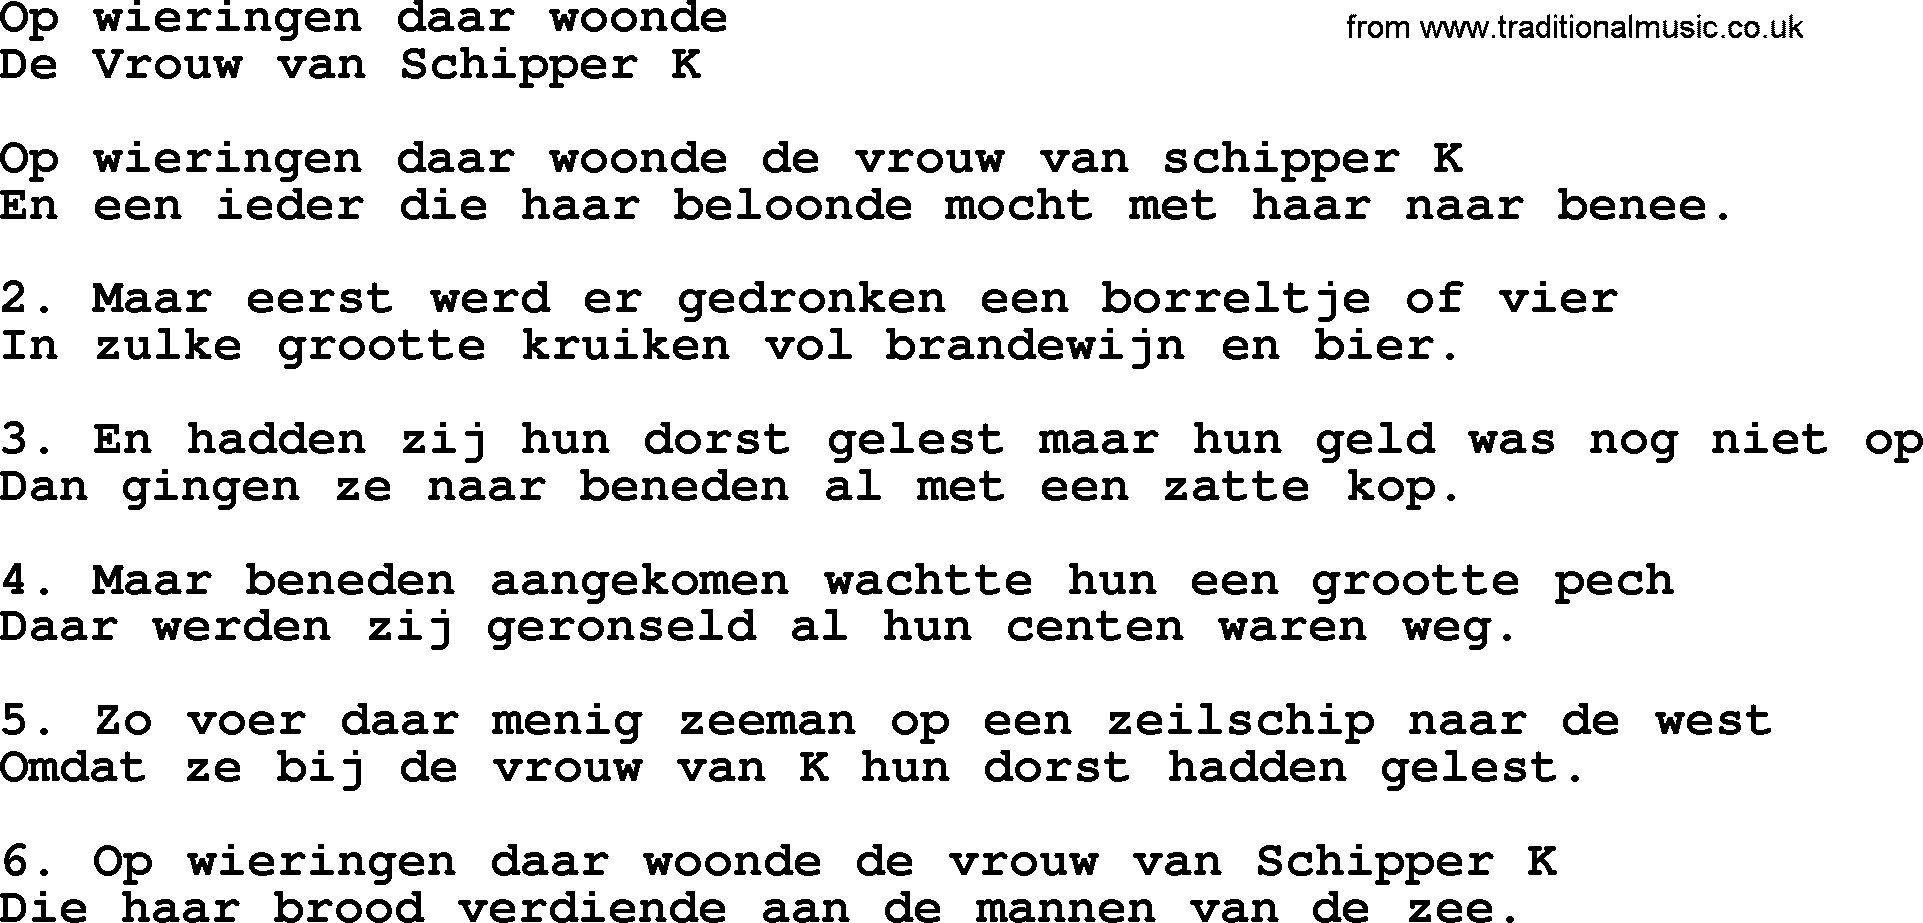 Sea Song or Shantie: Op Wieringen Daar Woonde, lyrics